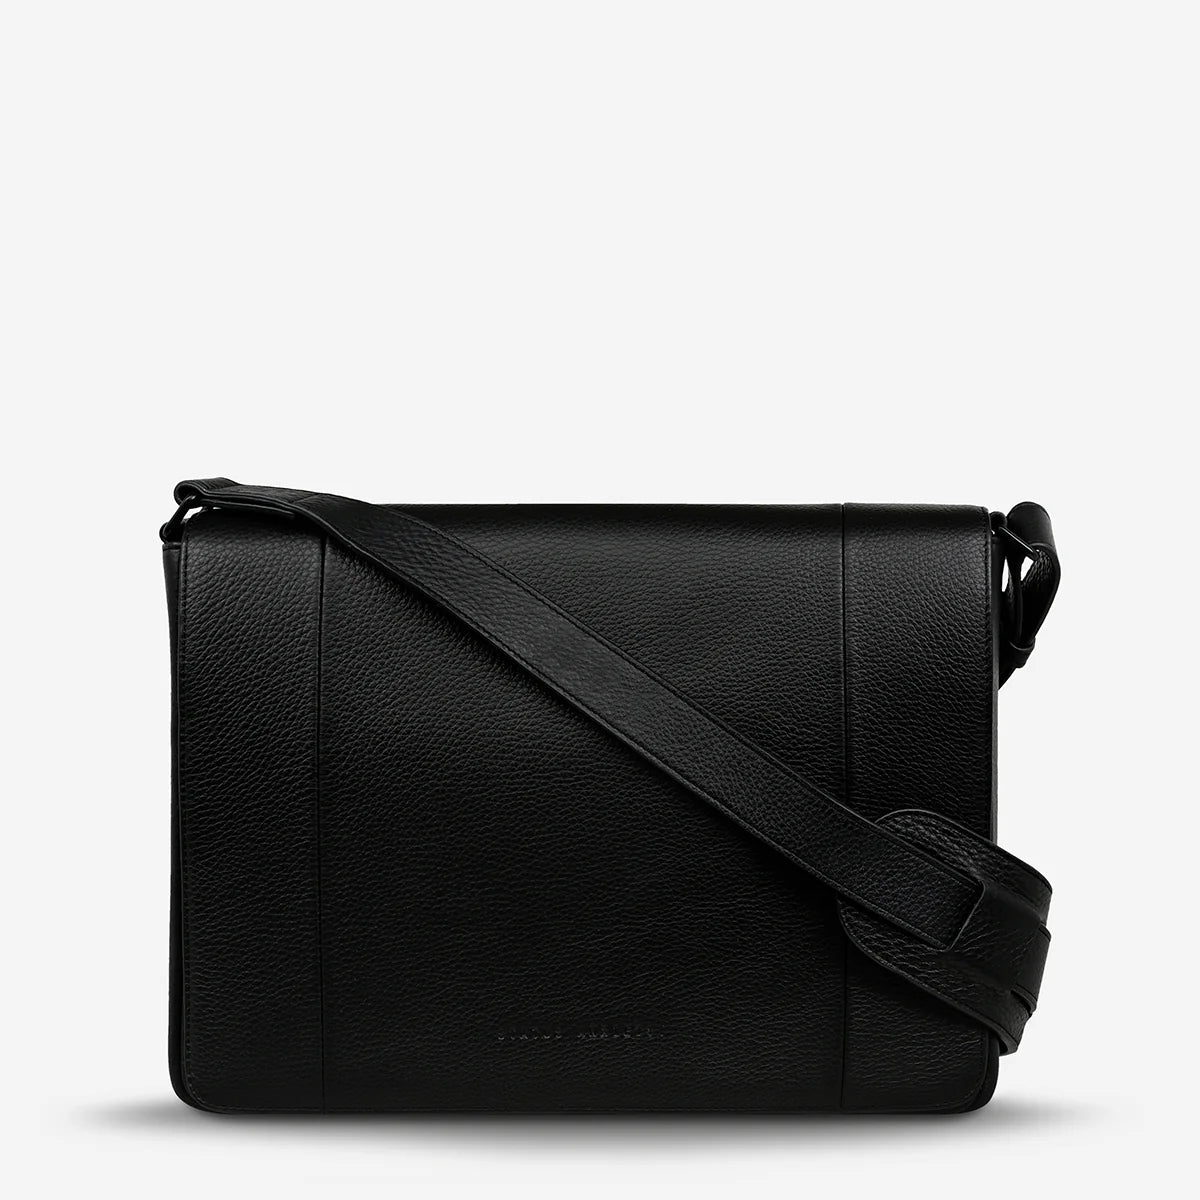 Set Your Sights - A Modern Essential Black Leather Laptop Bag